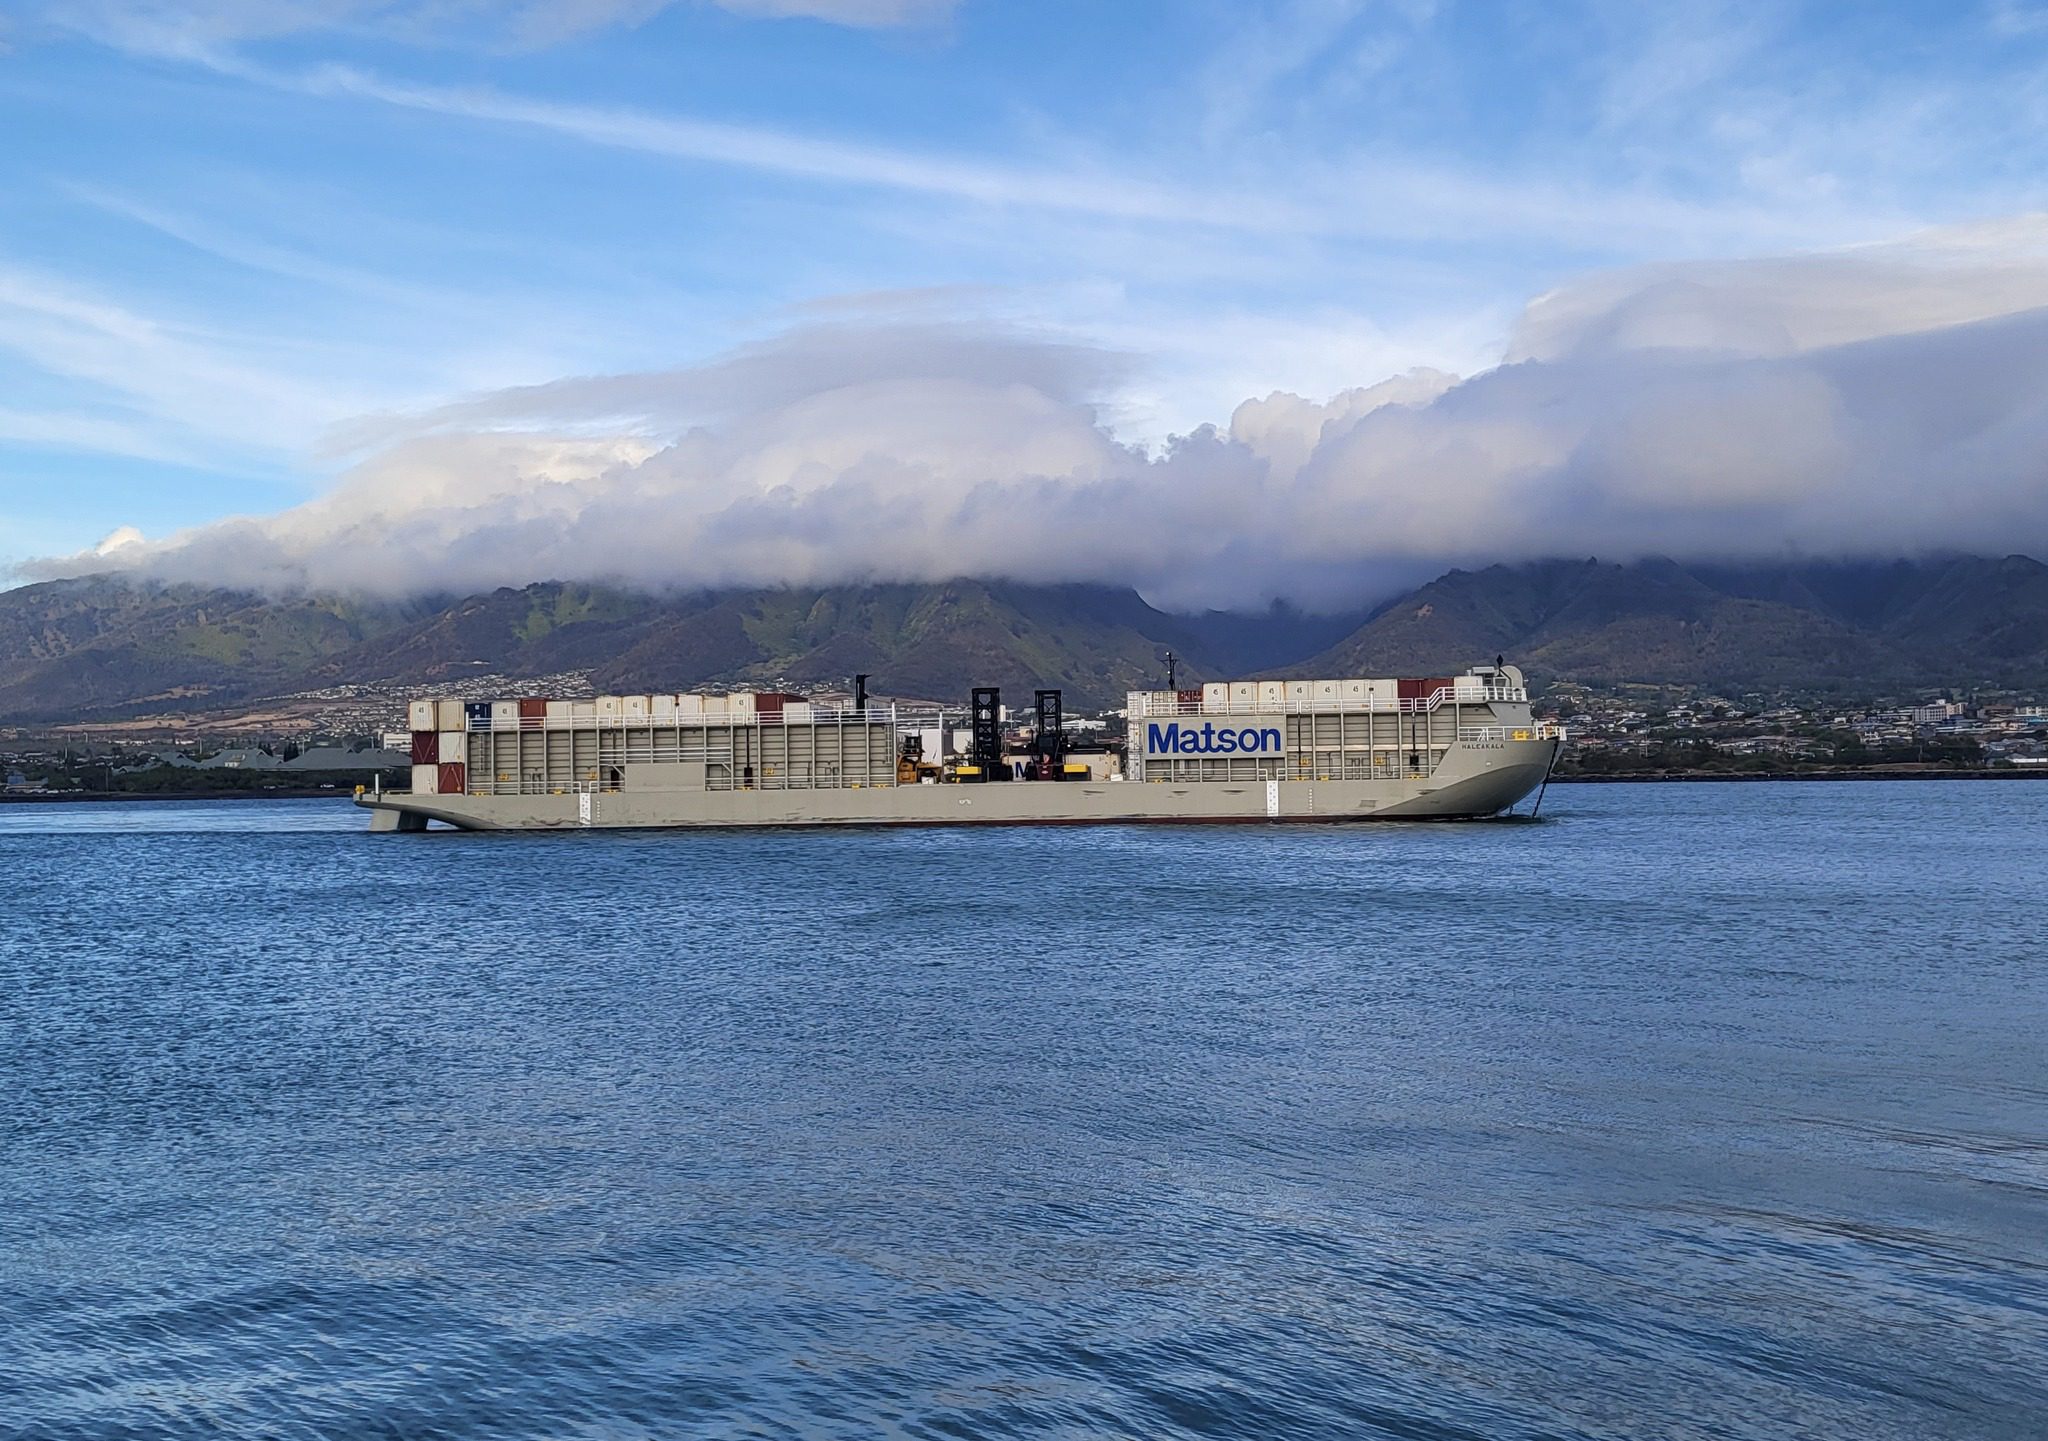 Matson's barge Haleakala. Photo courtesy Matson